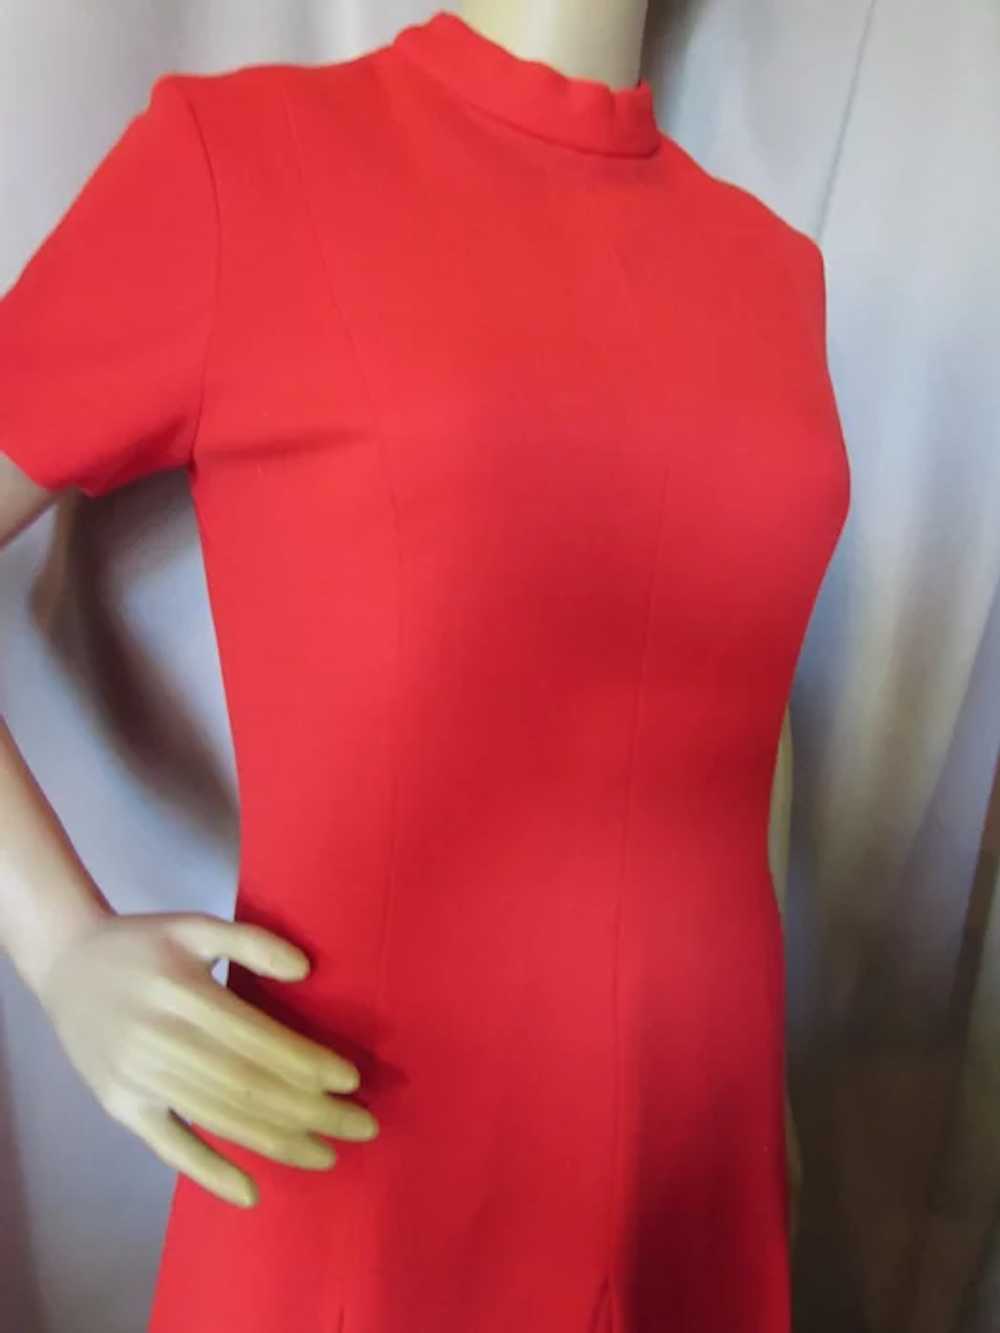 Cherry Red Knit Jacket Dress Set 1970 Era - image 4